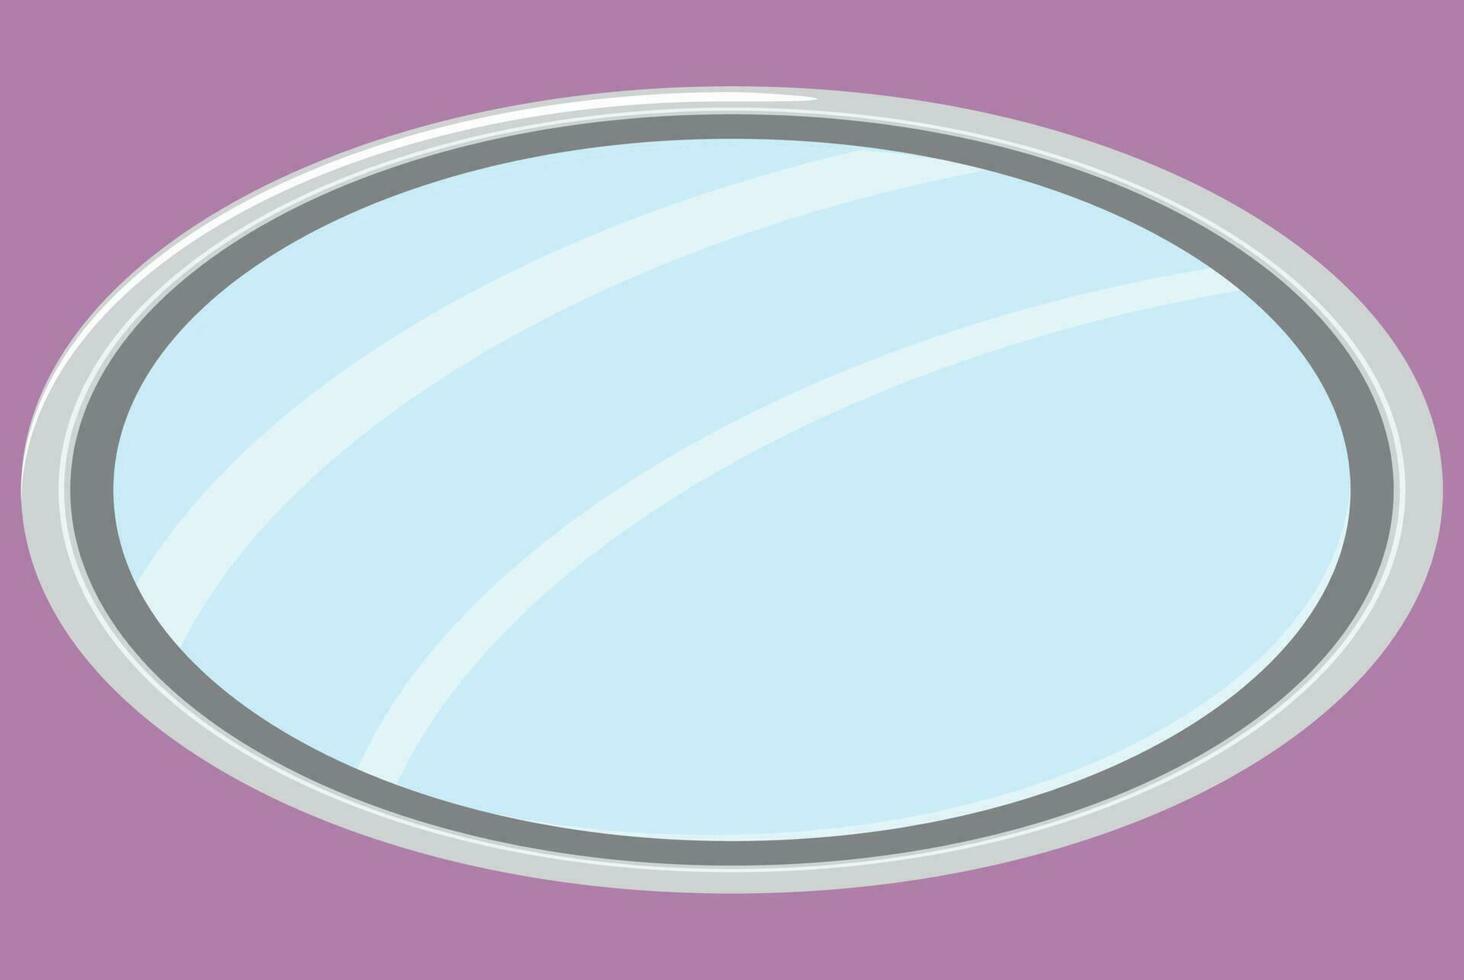 Spiegel isoliert Oval bilden vektor